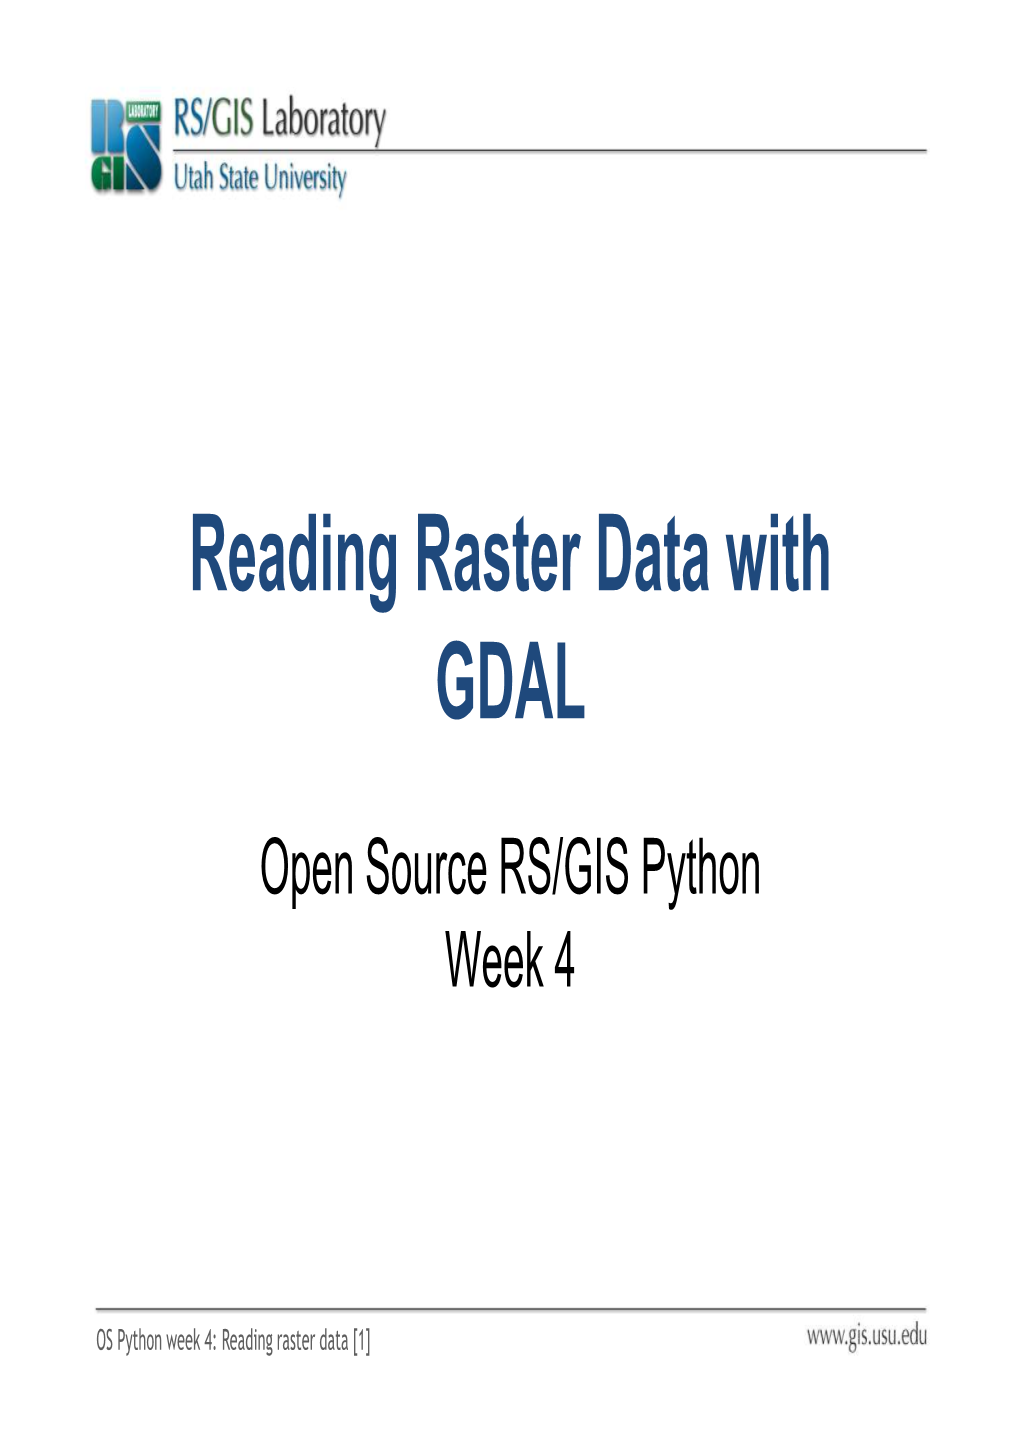 OS Python Week 4: Reading Raster Data with GDAL